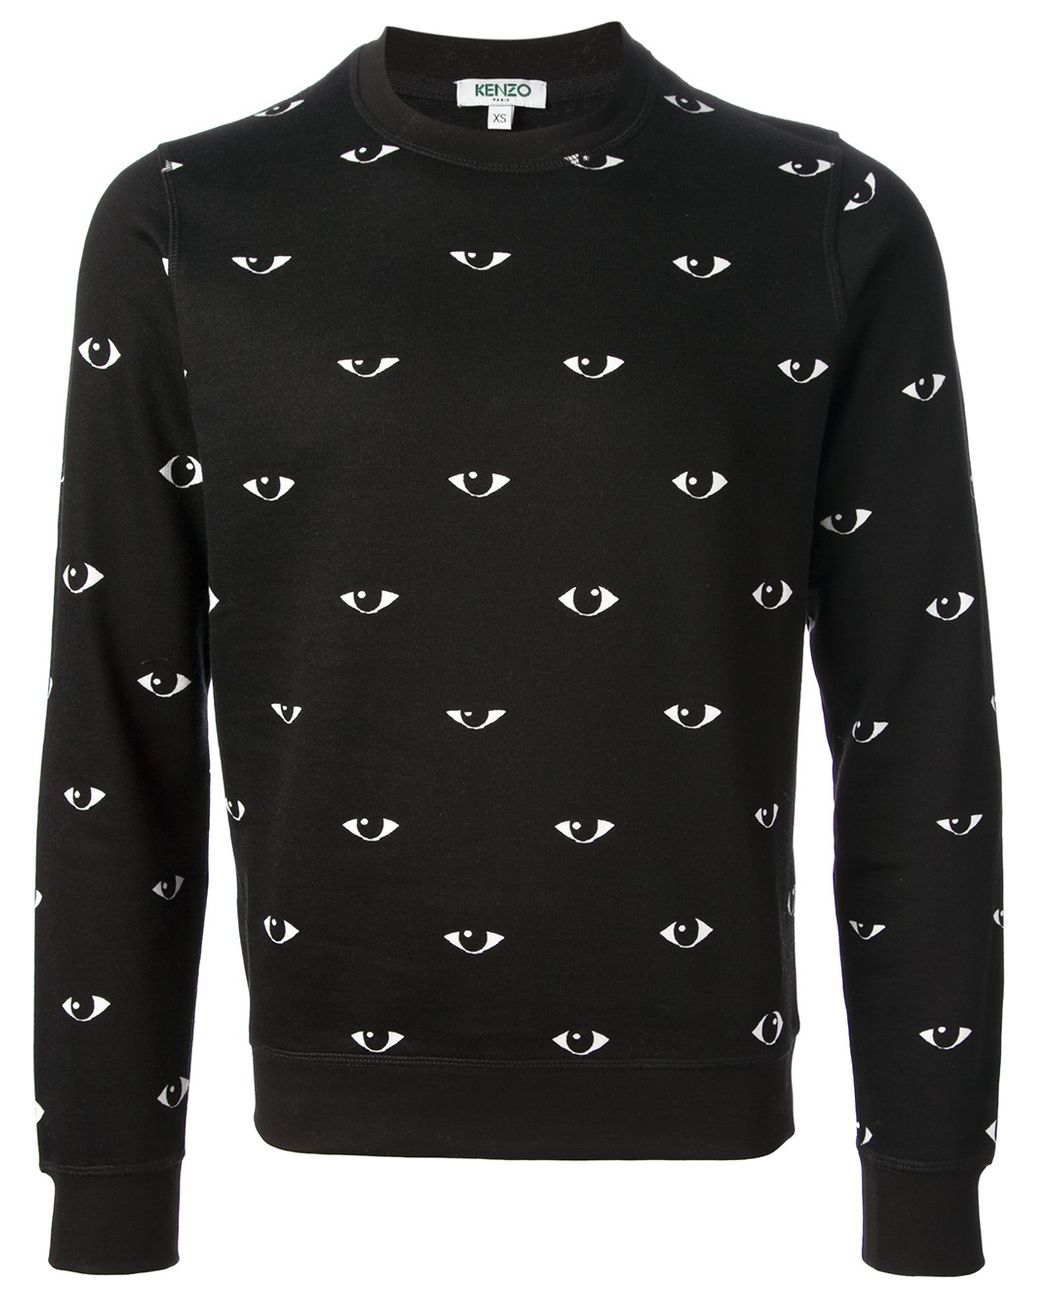 KENZO Eye Print Sweater in Black for Men | Lyst